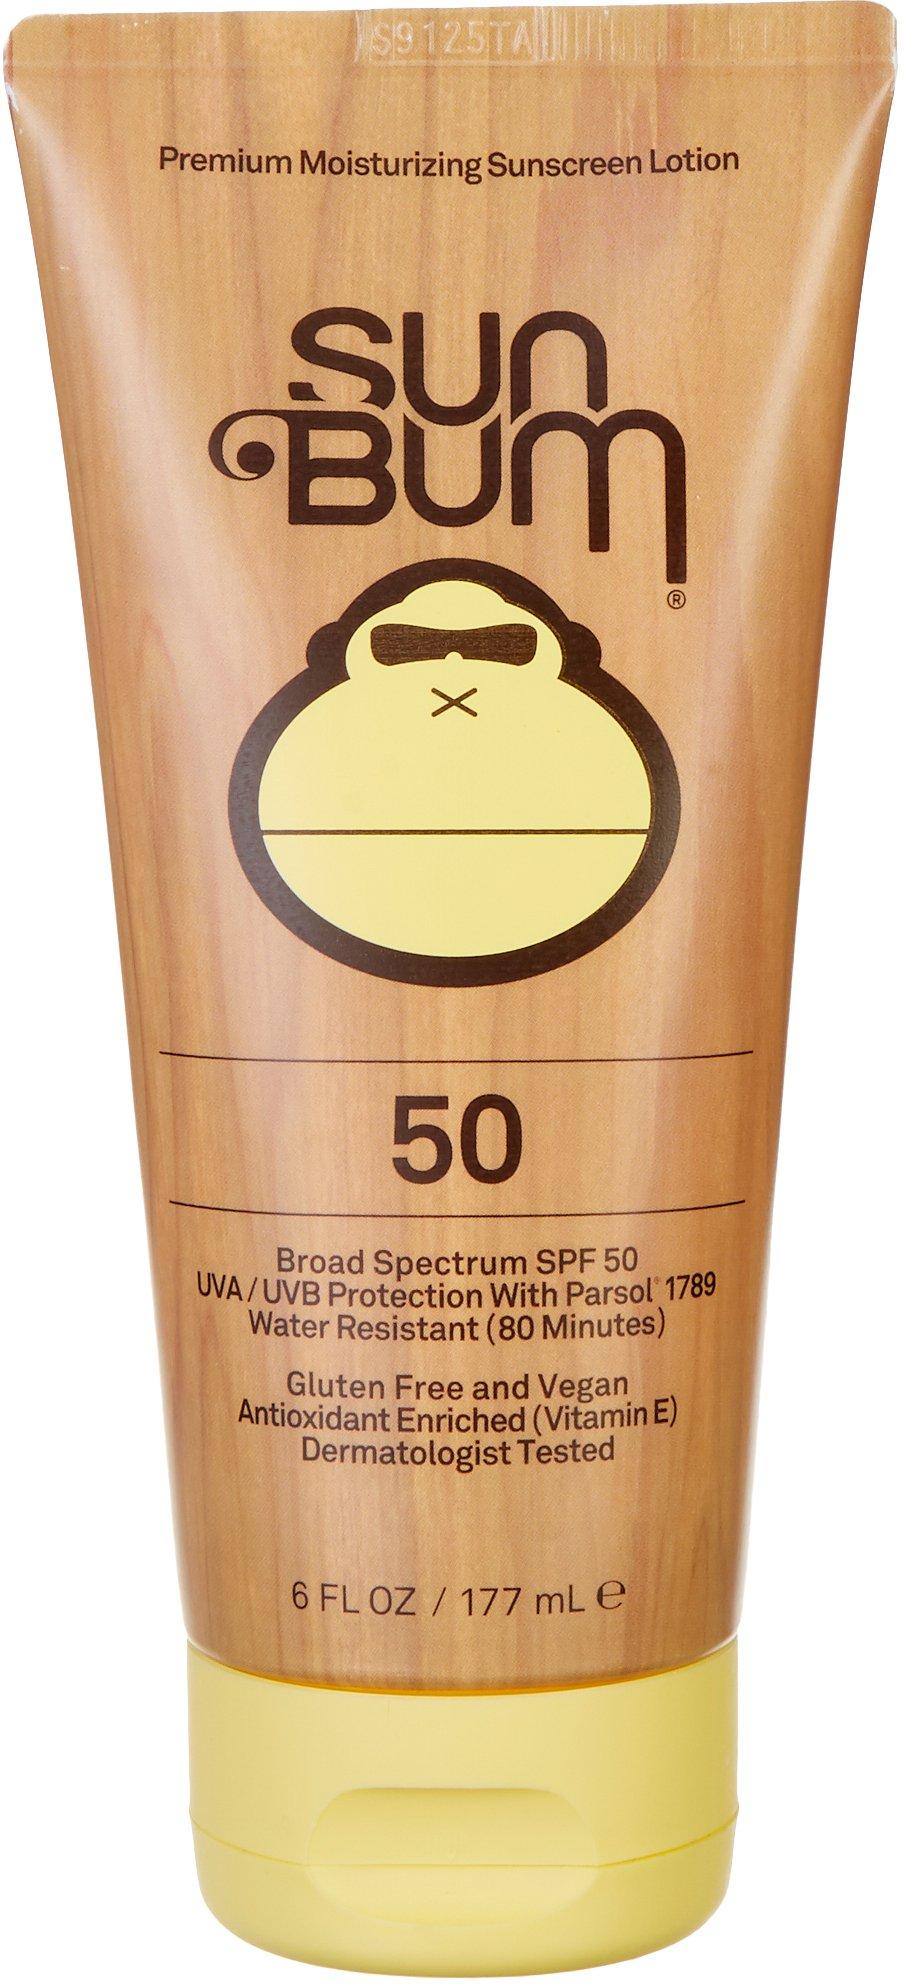 Sun Bum SPF 50 Premium Moisturizing Sunscreen Lotion